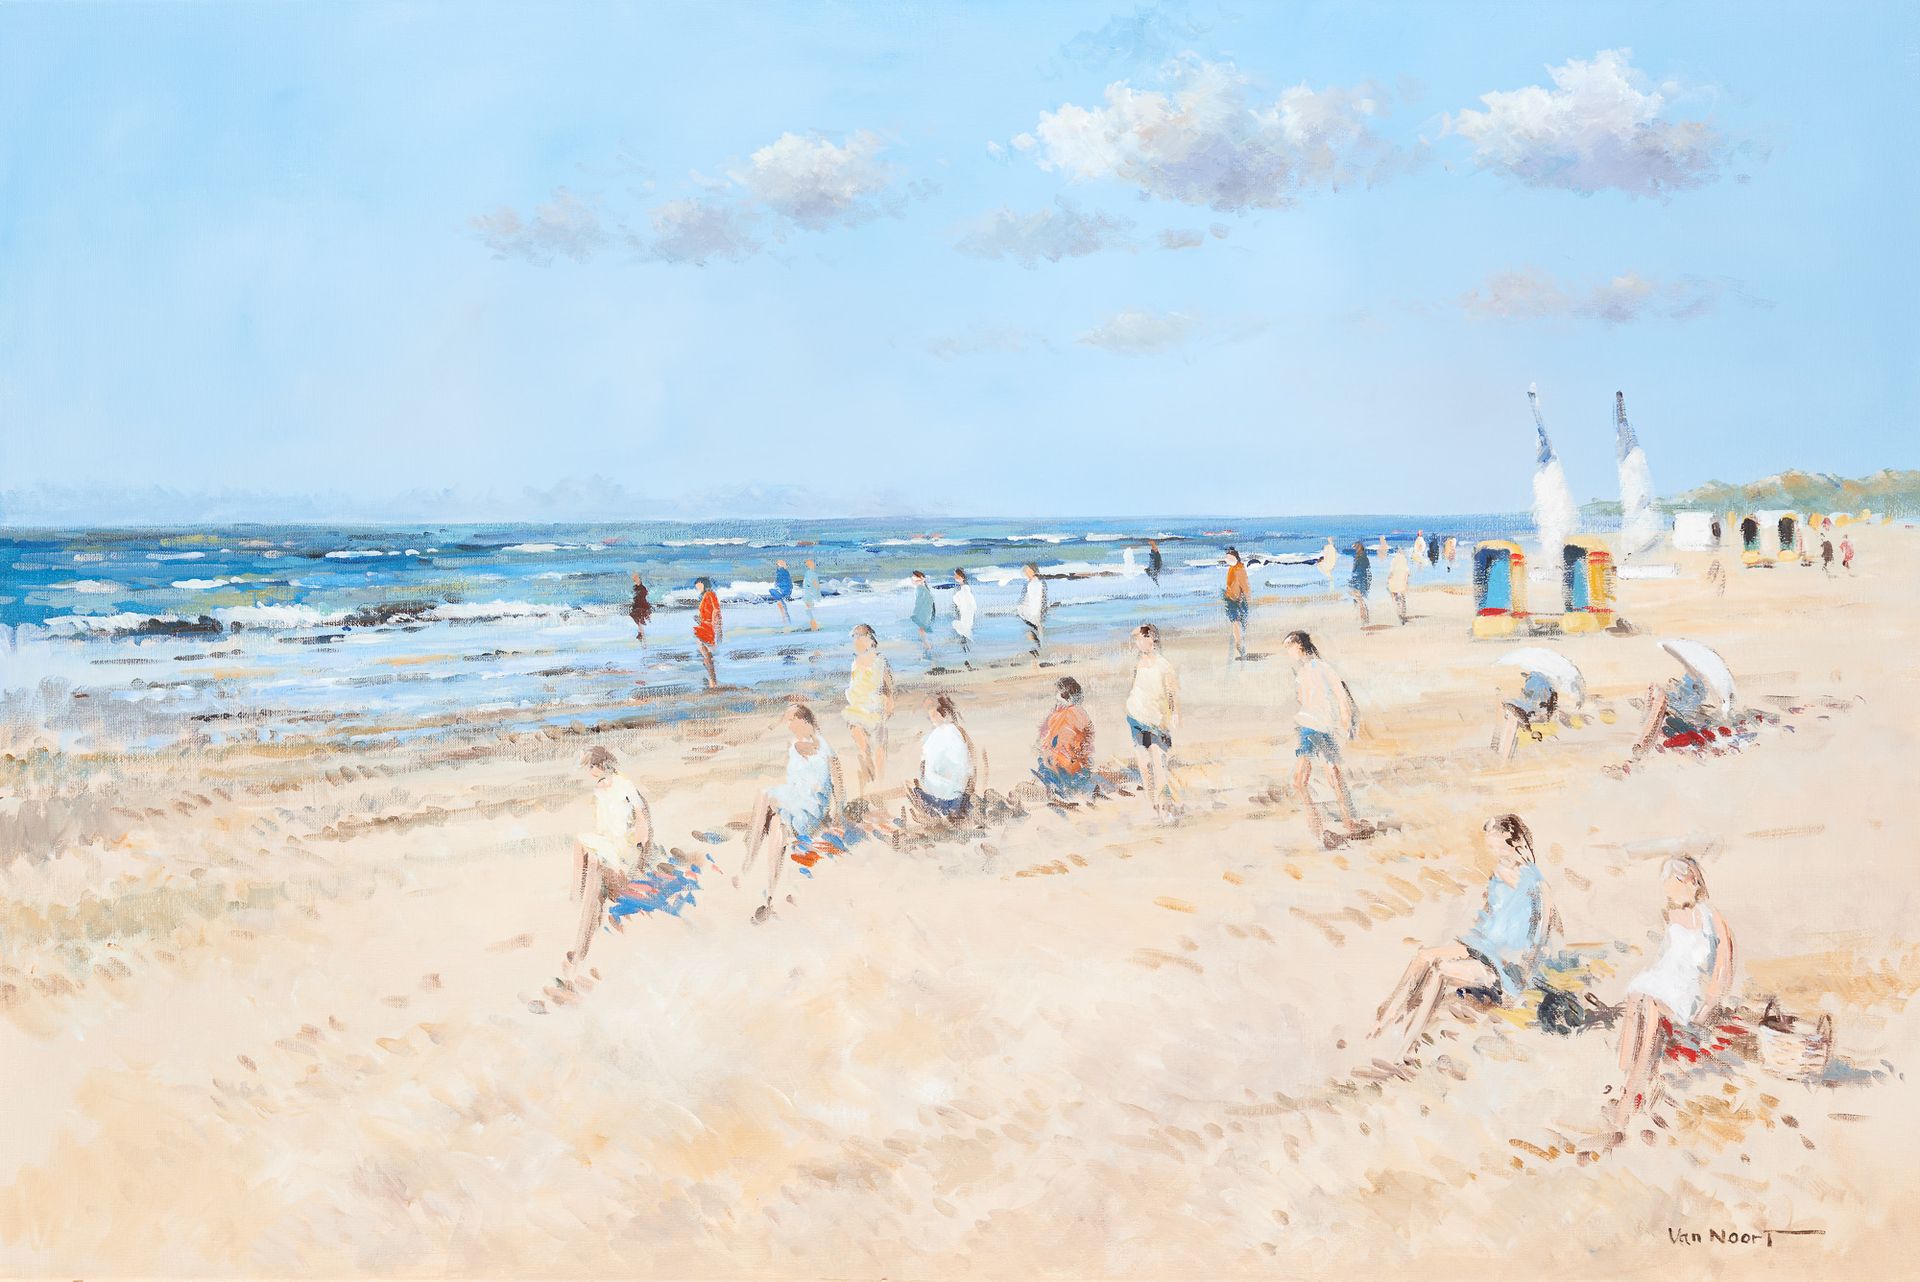 Alexander VAN NOORT École hollandaise (1953) Oil on canvas: Beach by the sea.

S&hellip;